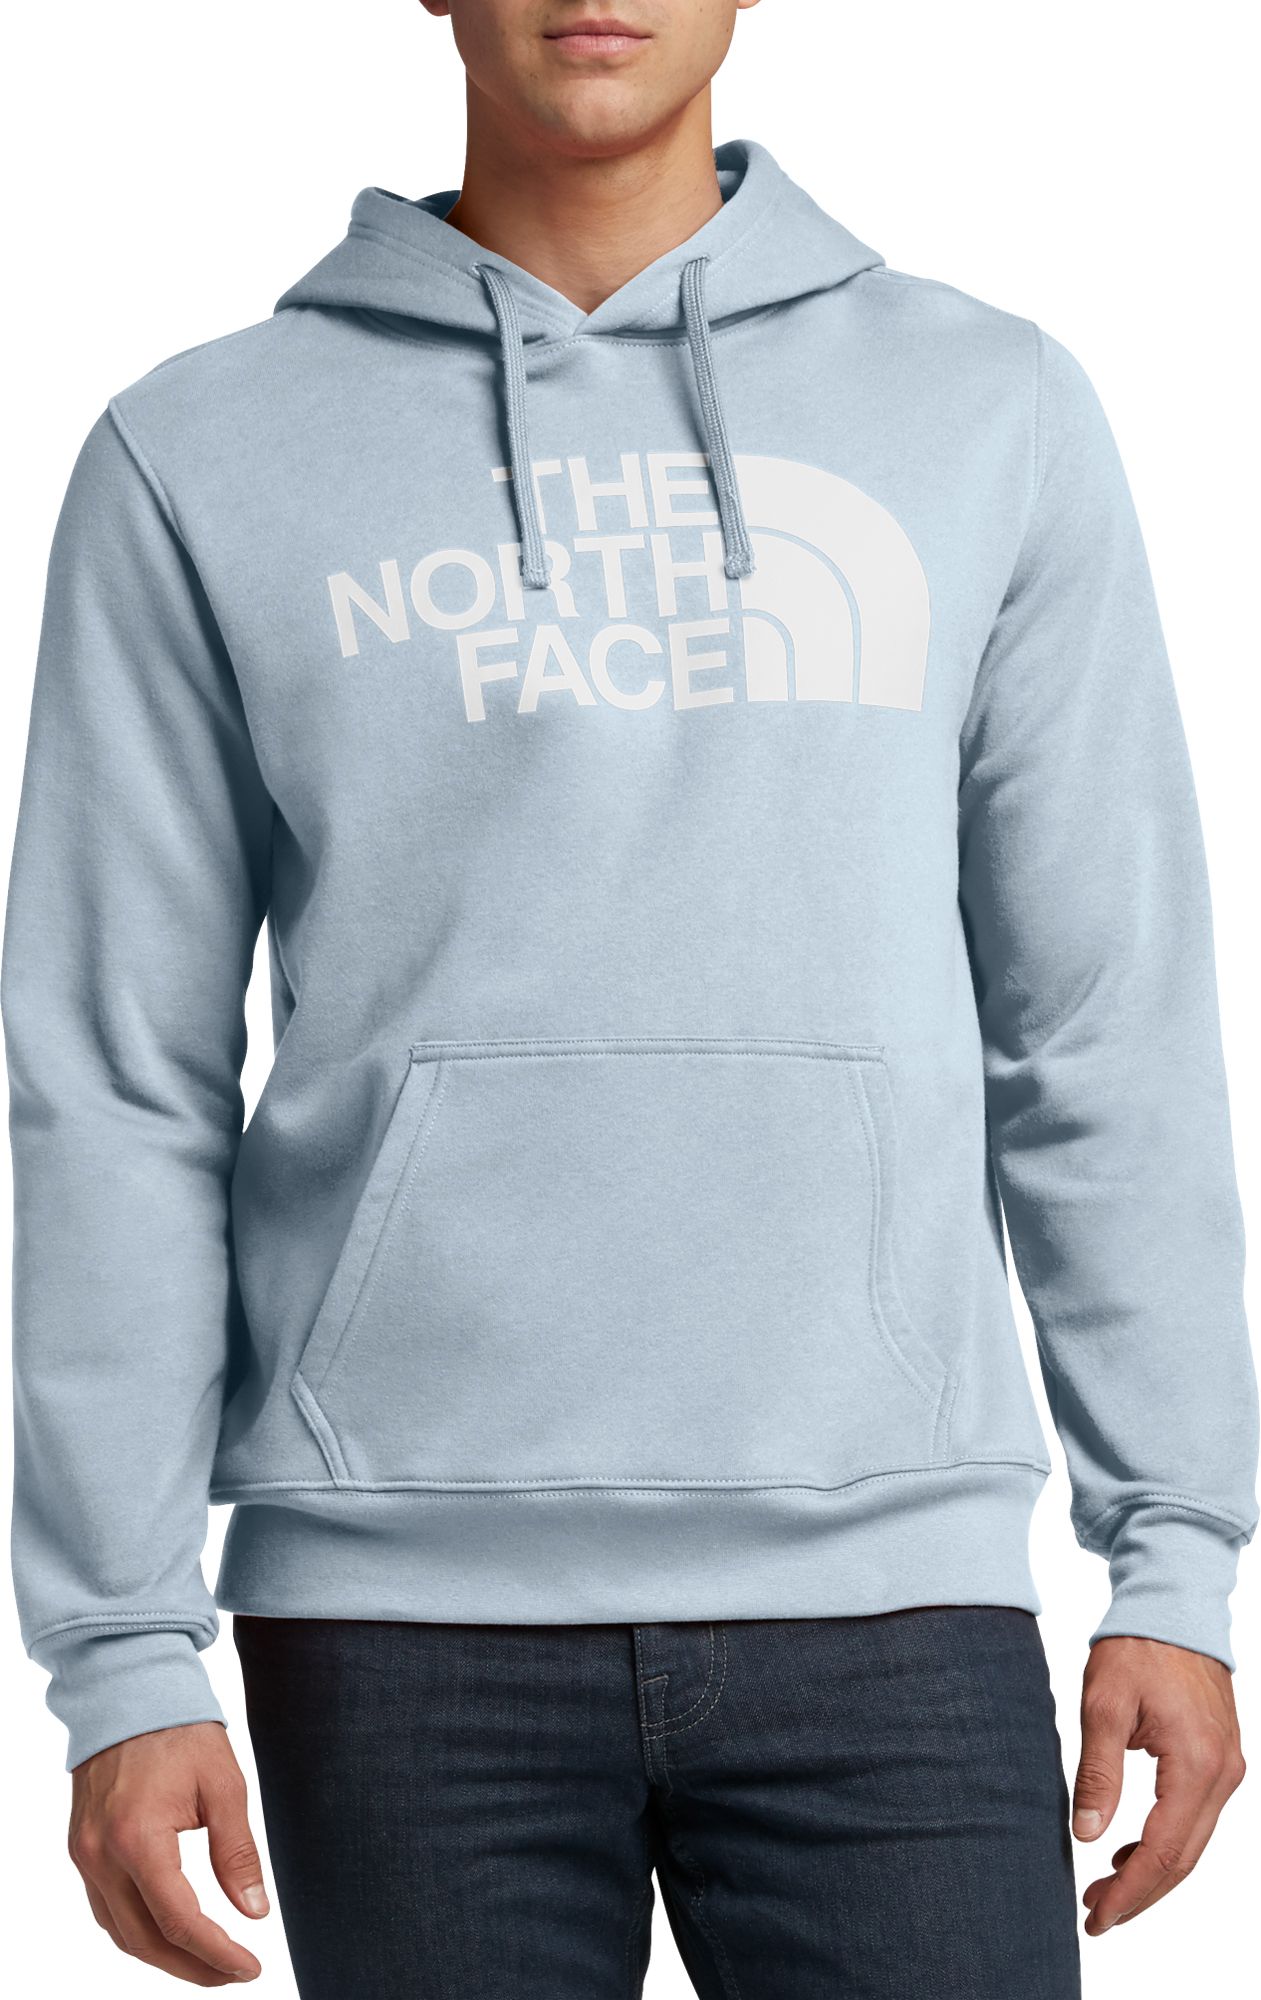 dicks north face hoodie off 69 